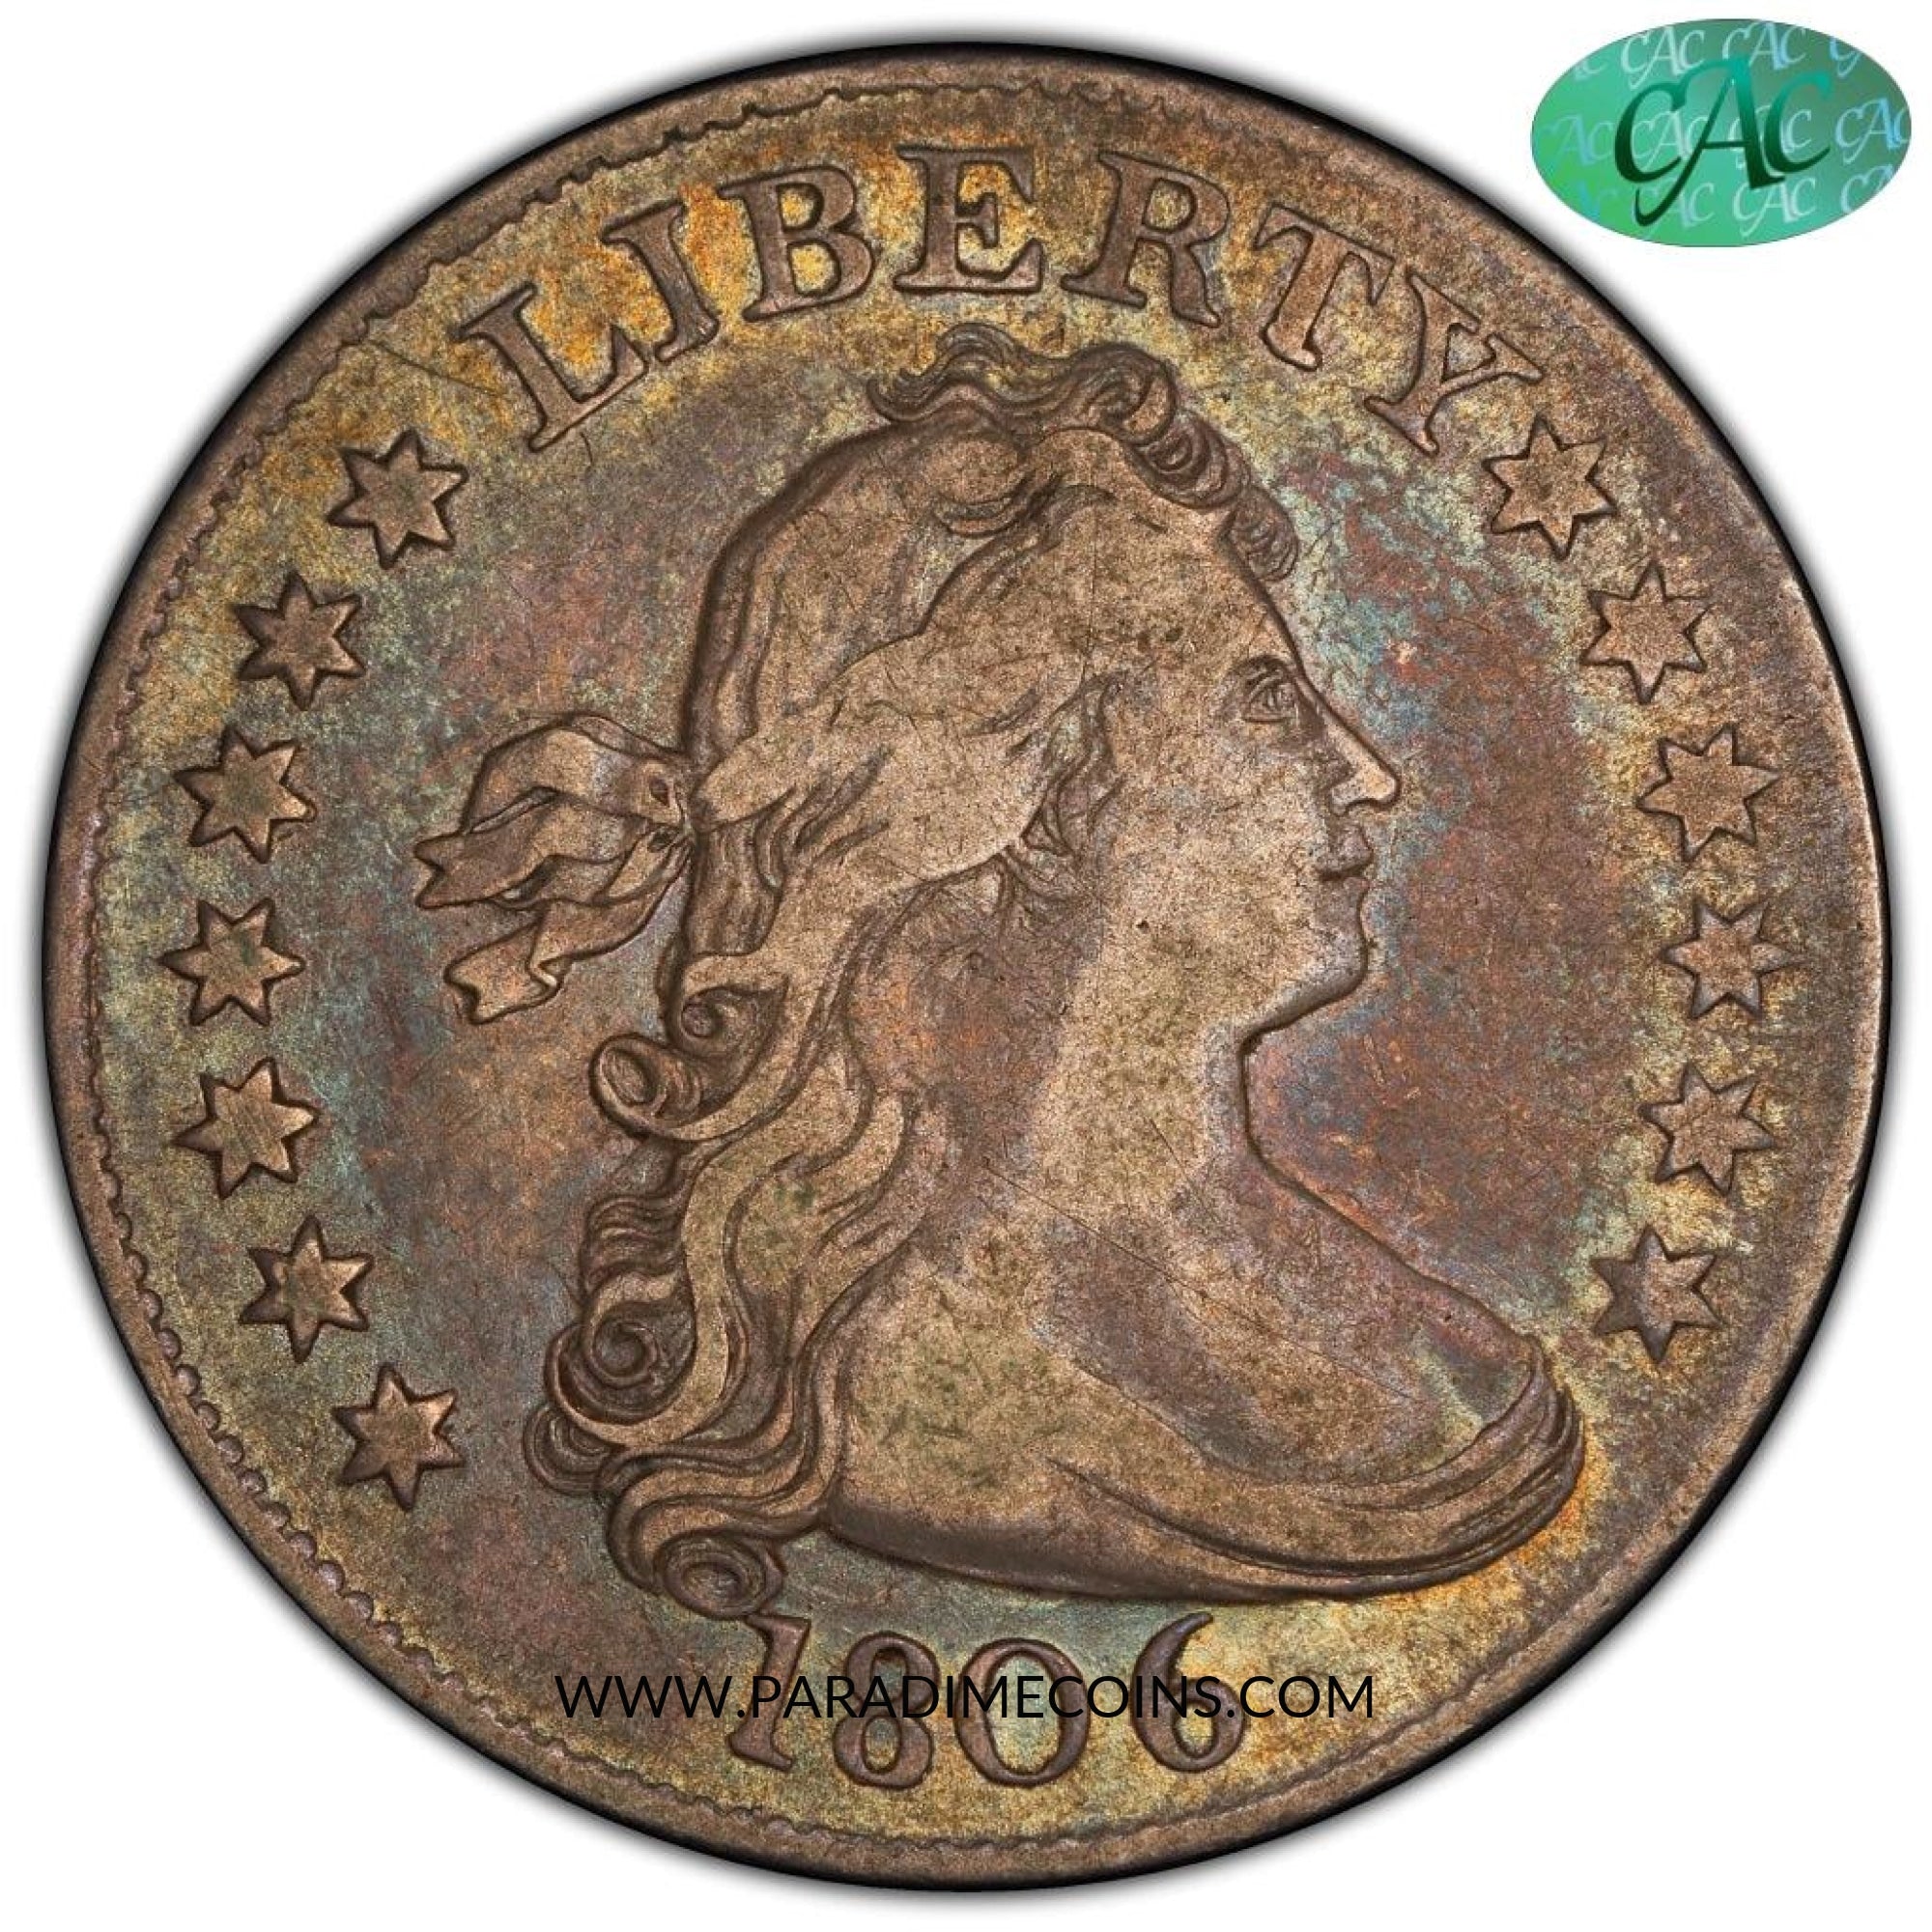 1806 25C VF35 PCGS CAC - Paradime Coins | PCGS NGC CACG CAC Rare US Numismatic Coins For Sale